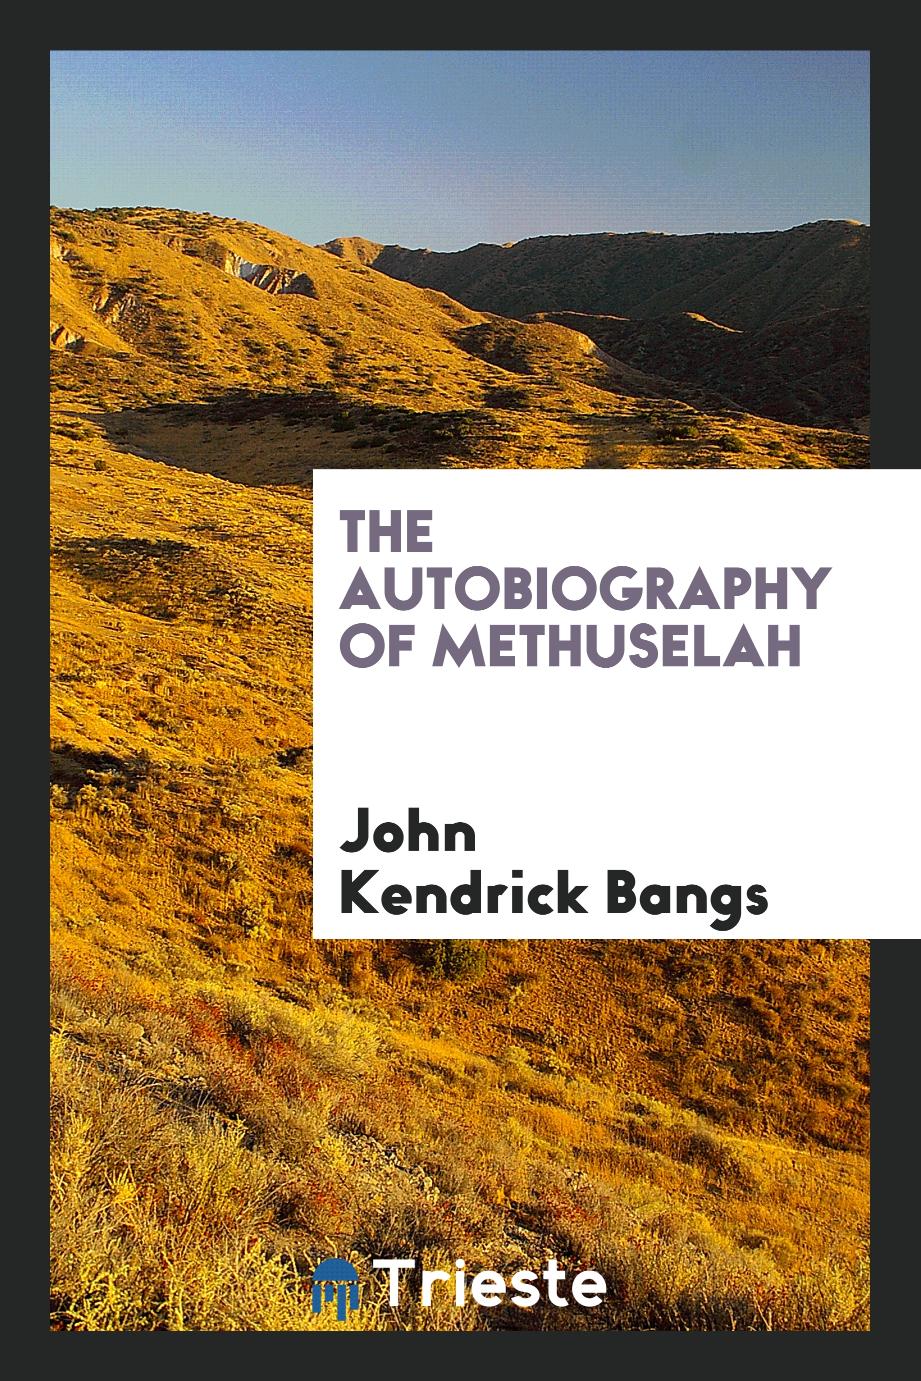 The autobiography of Methuselah